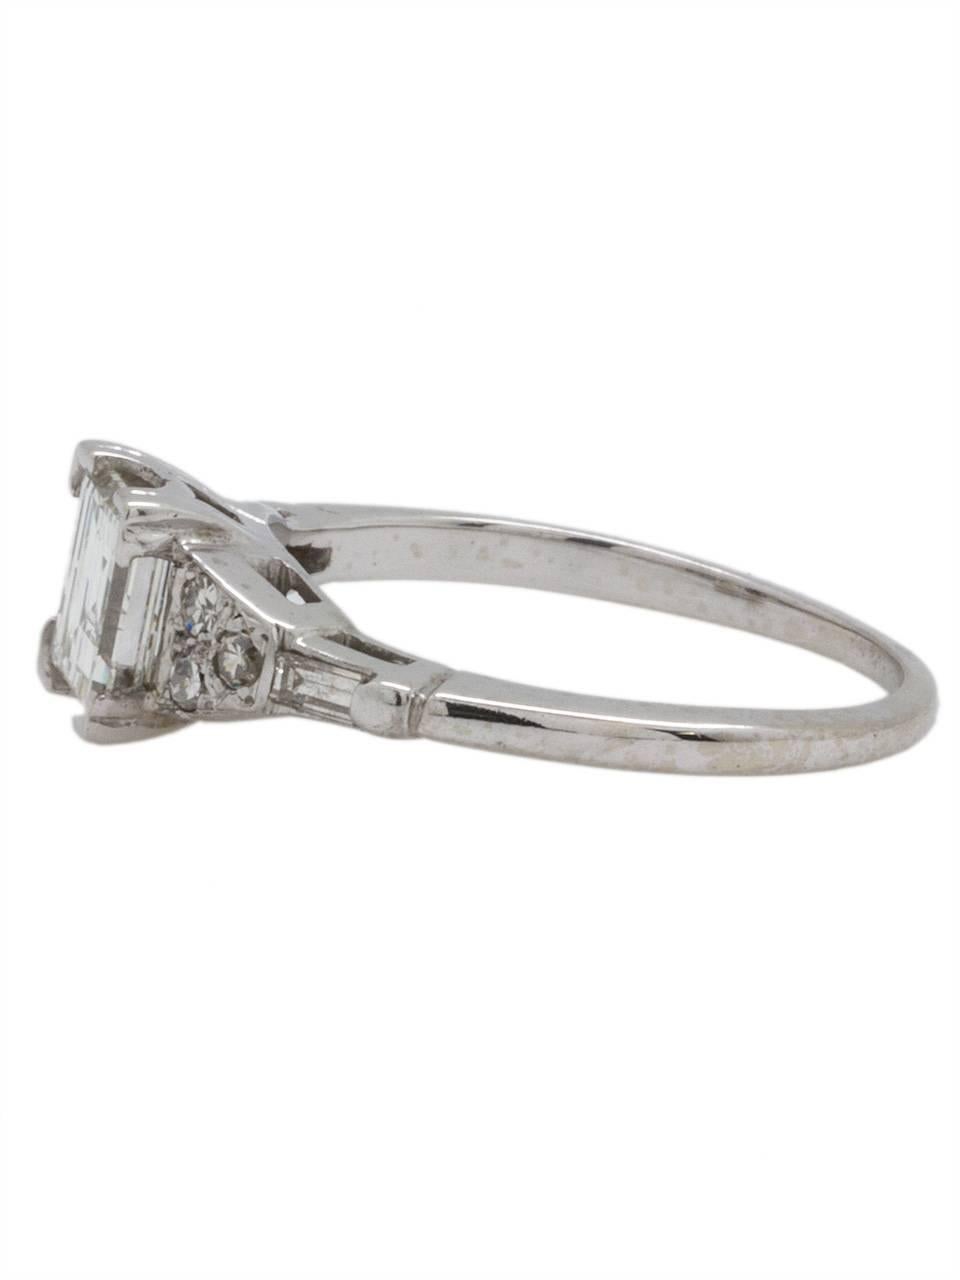 Retro Vintage Diamond Engagement Ring 1.04ct Step Cut H/VS2 circa 1950s For Sale